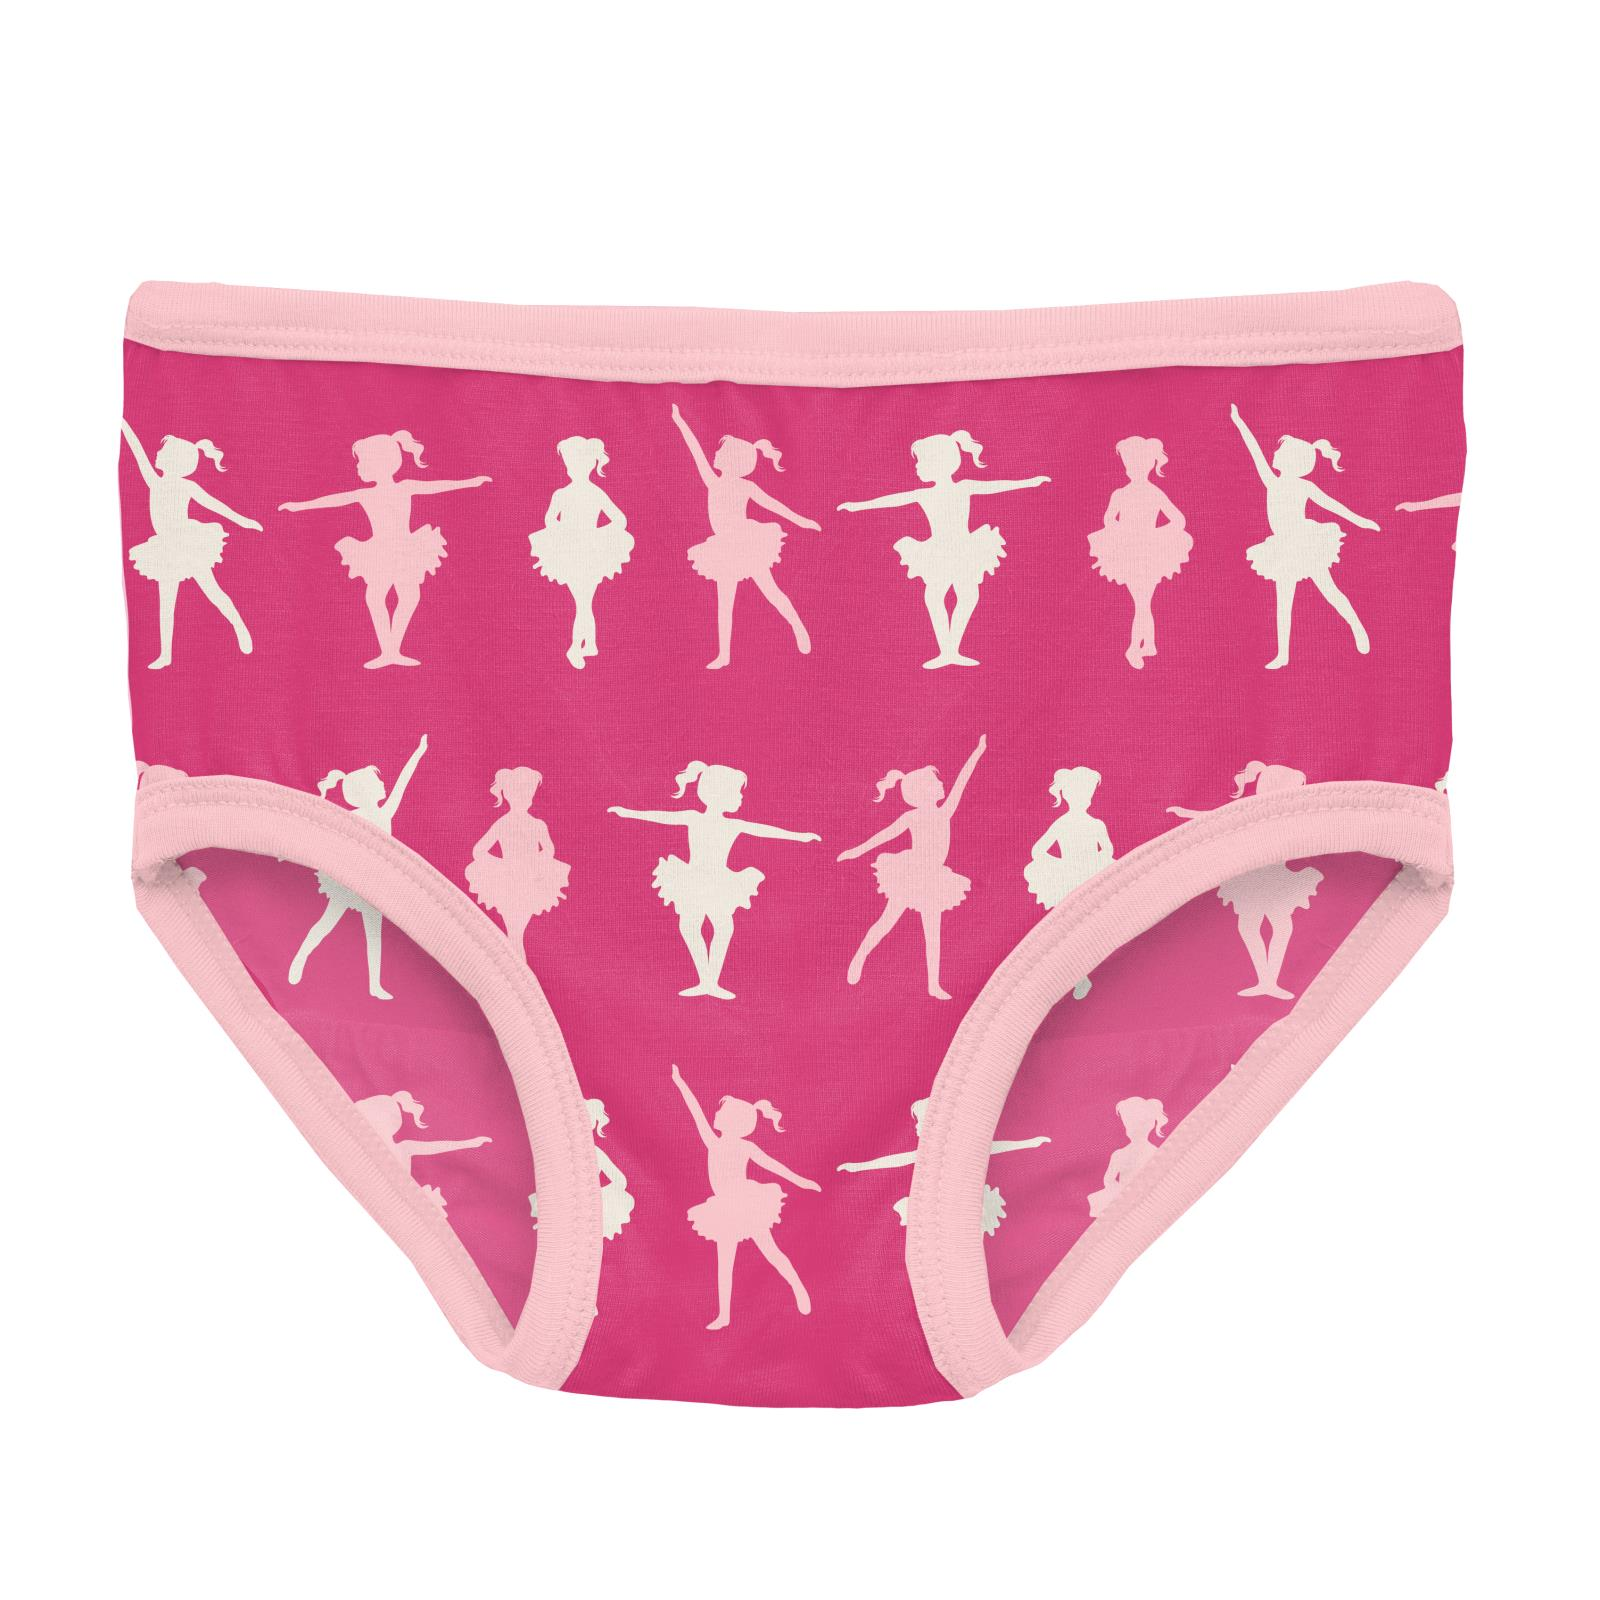 Kickee Pants Calypso Ballerina Print Girl's Underwear